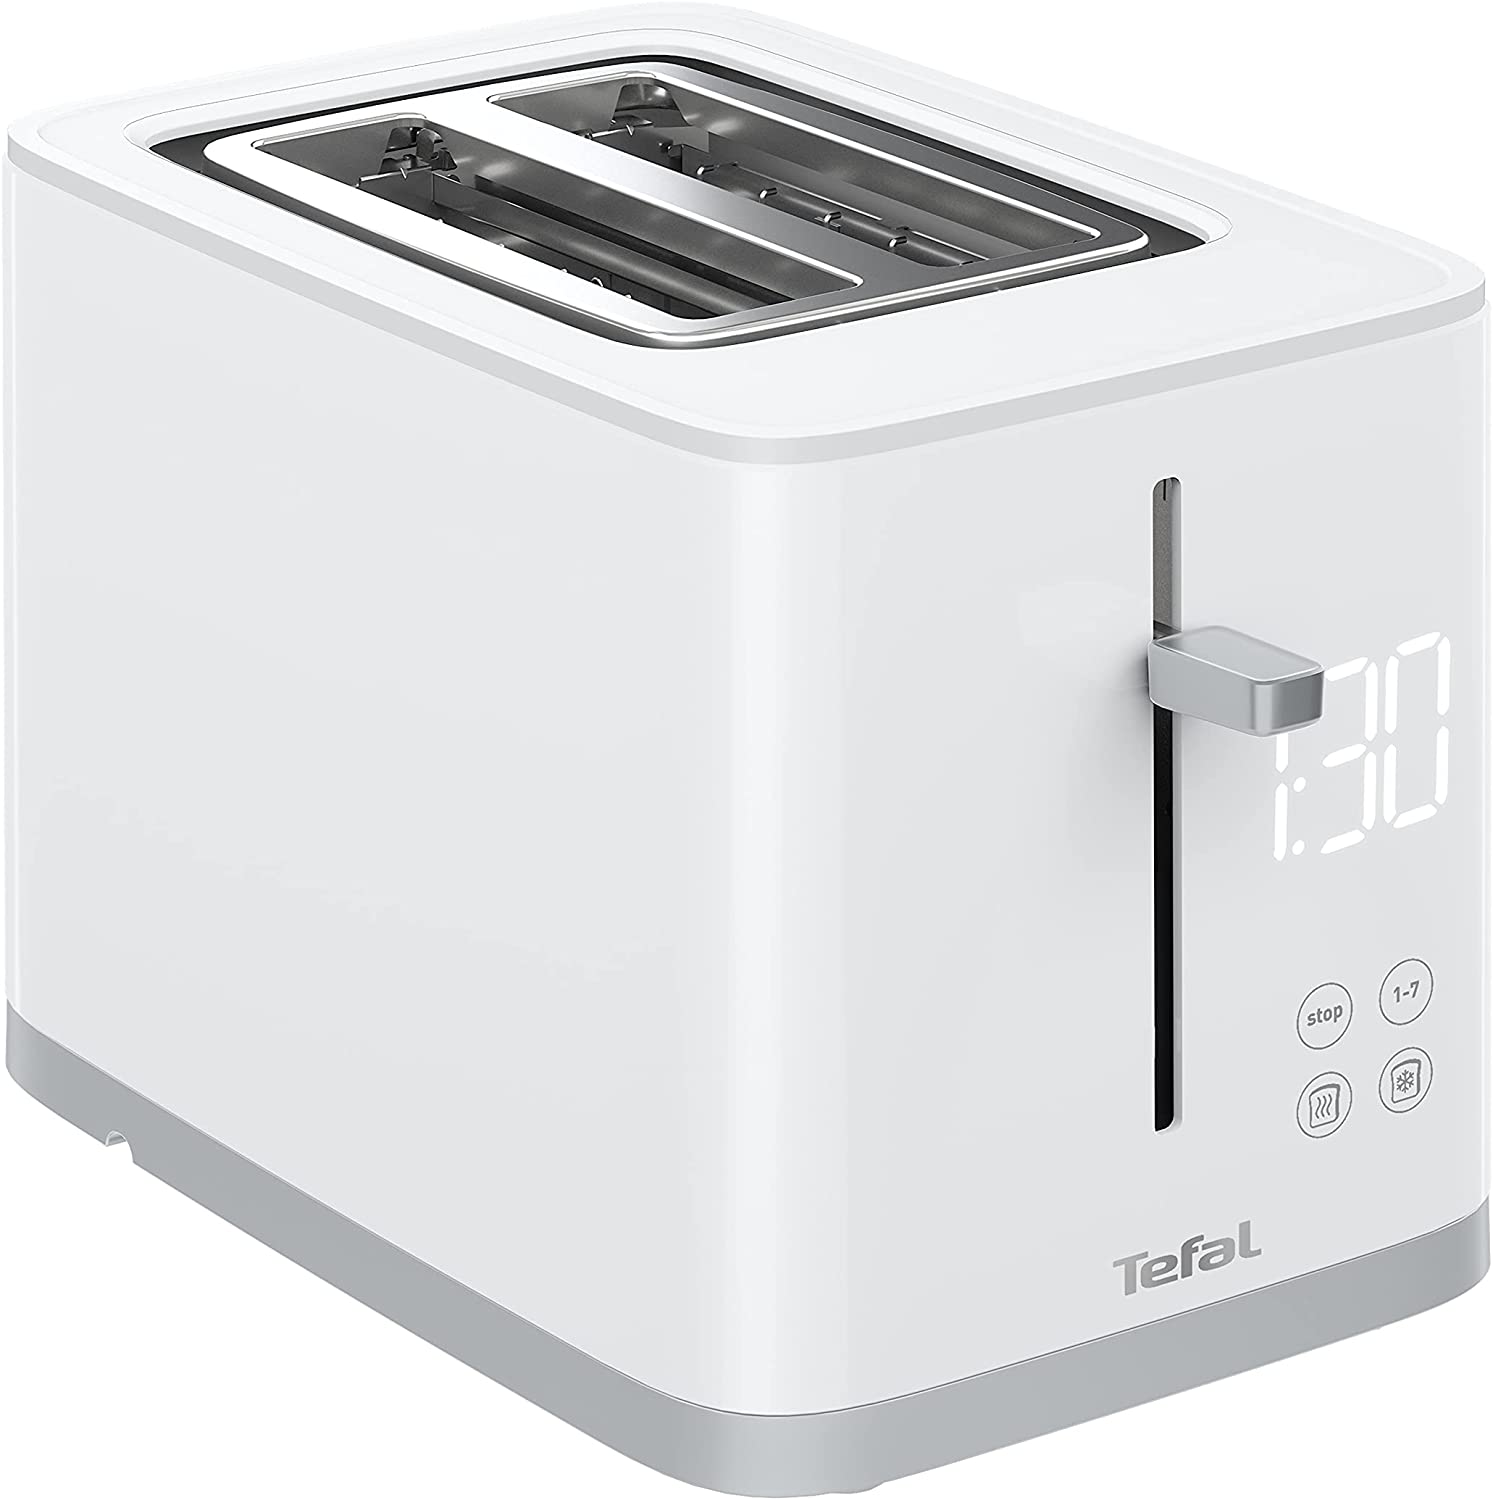 Tefal TT6931 Sense Toaster, 7 Browning Levels, Digital Display, Countdown, Warming/Defrosting, Crumb Drawer, Stop Button, White